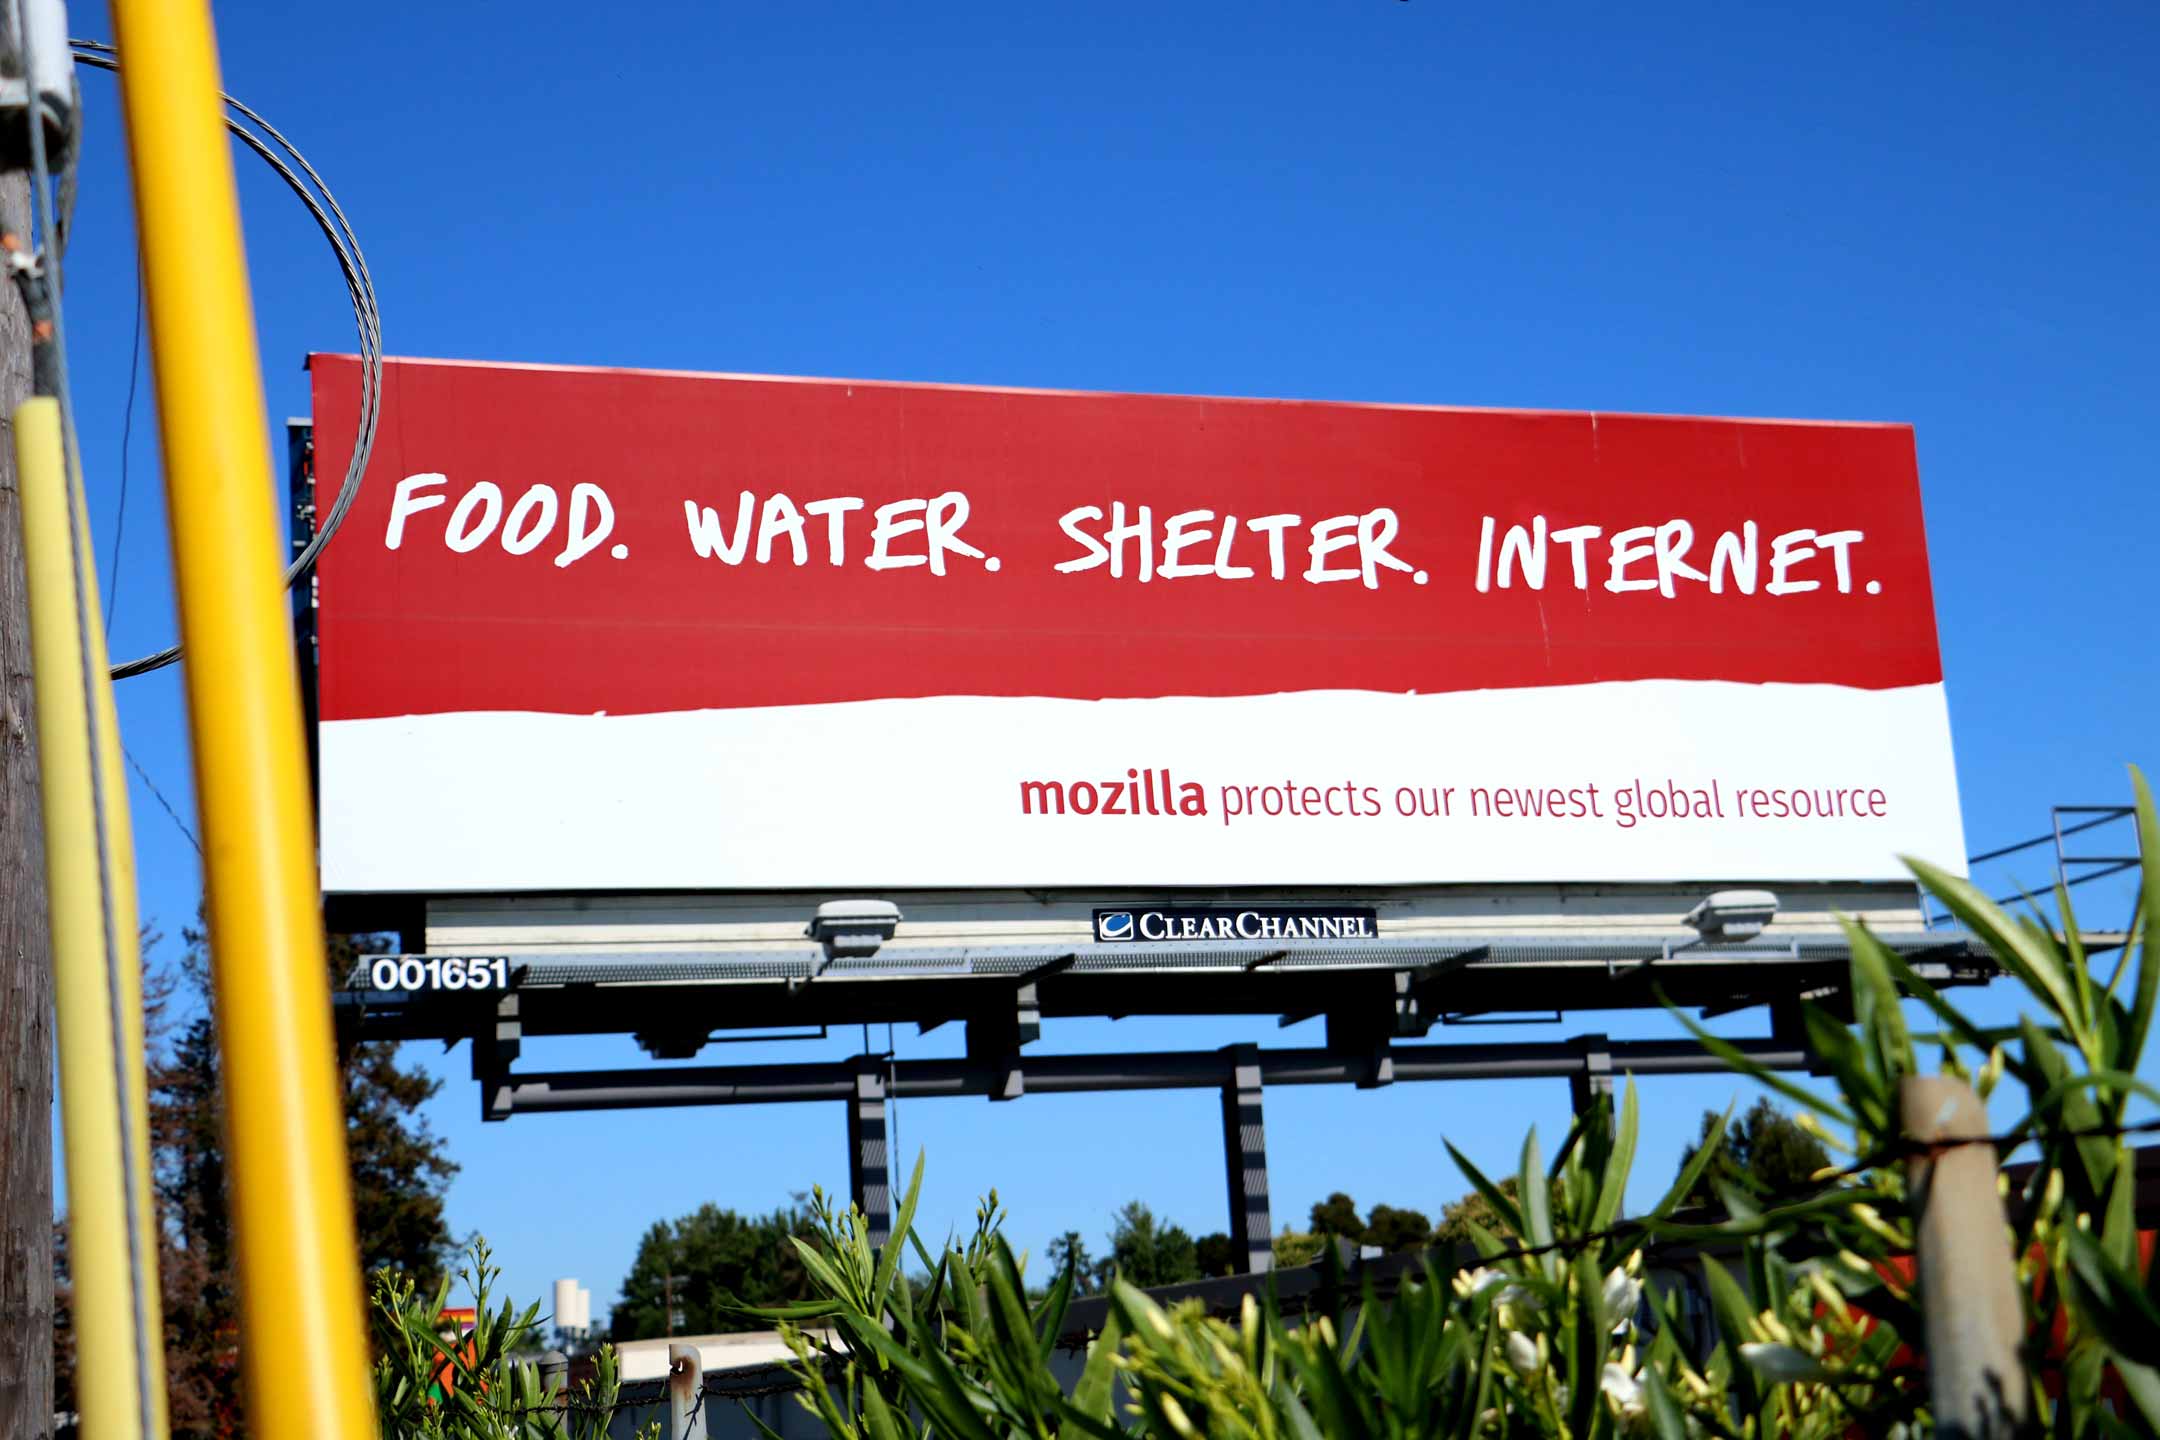 [Mozilla advertisement: “Food. Water. Shelter. Internet.”]